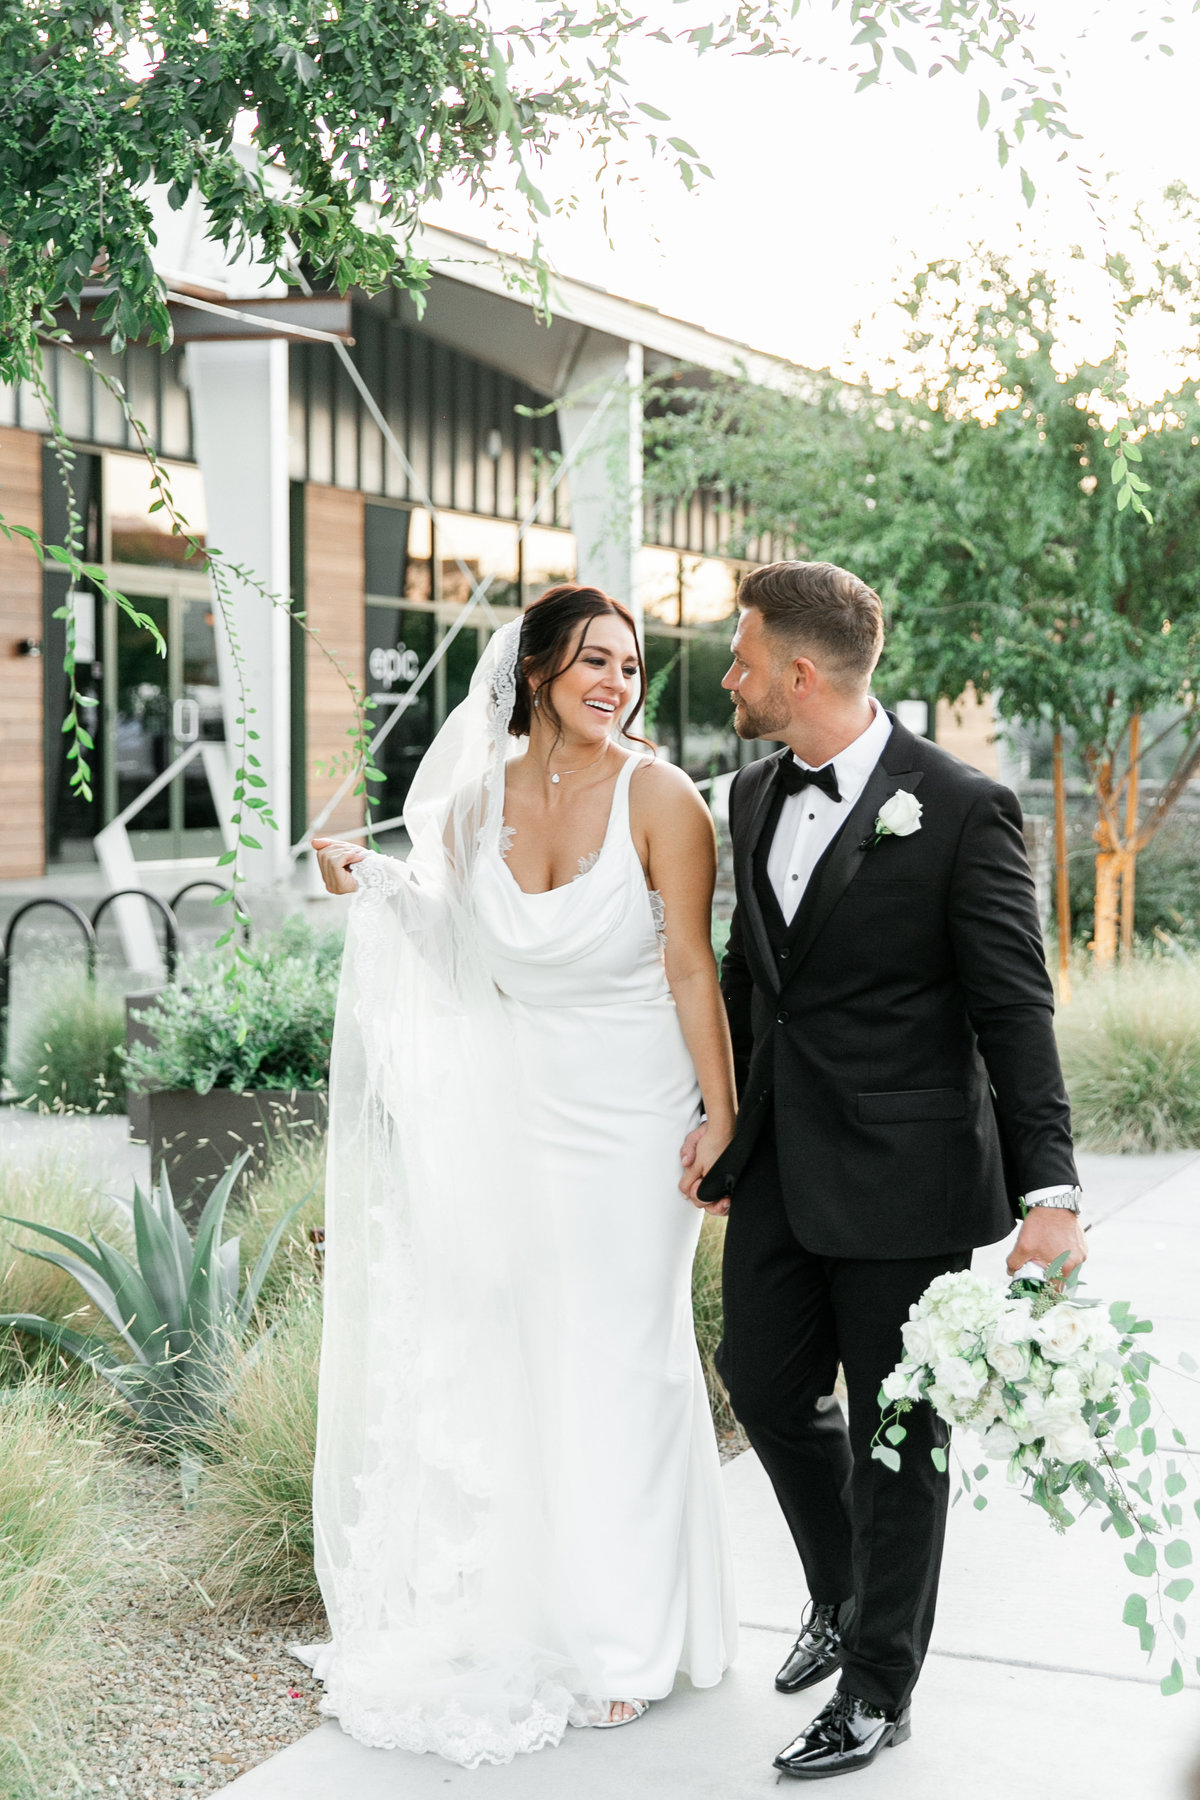 Karlie Colleen Photography - Phoenix Scottsdale Arizona Wedding - The Clayton House - Matt & Jori-589